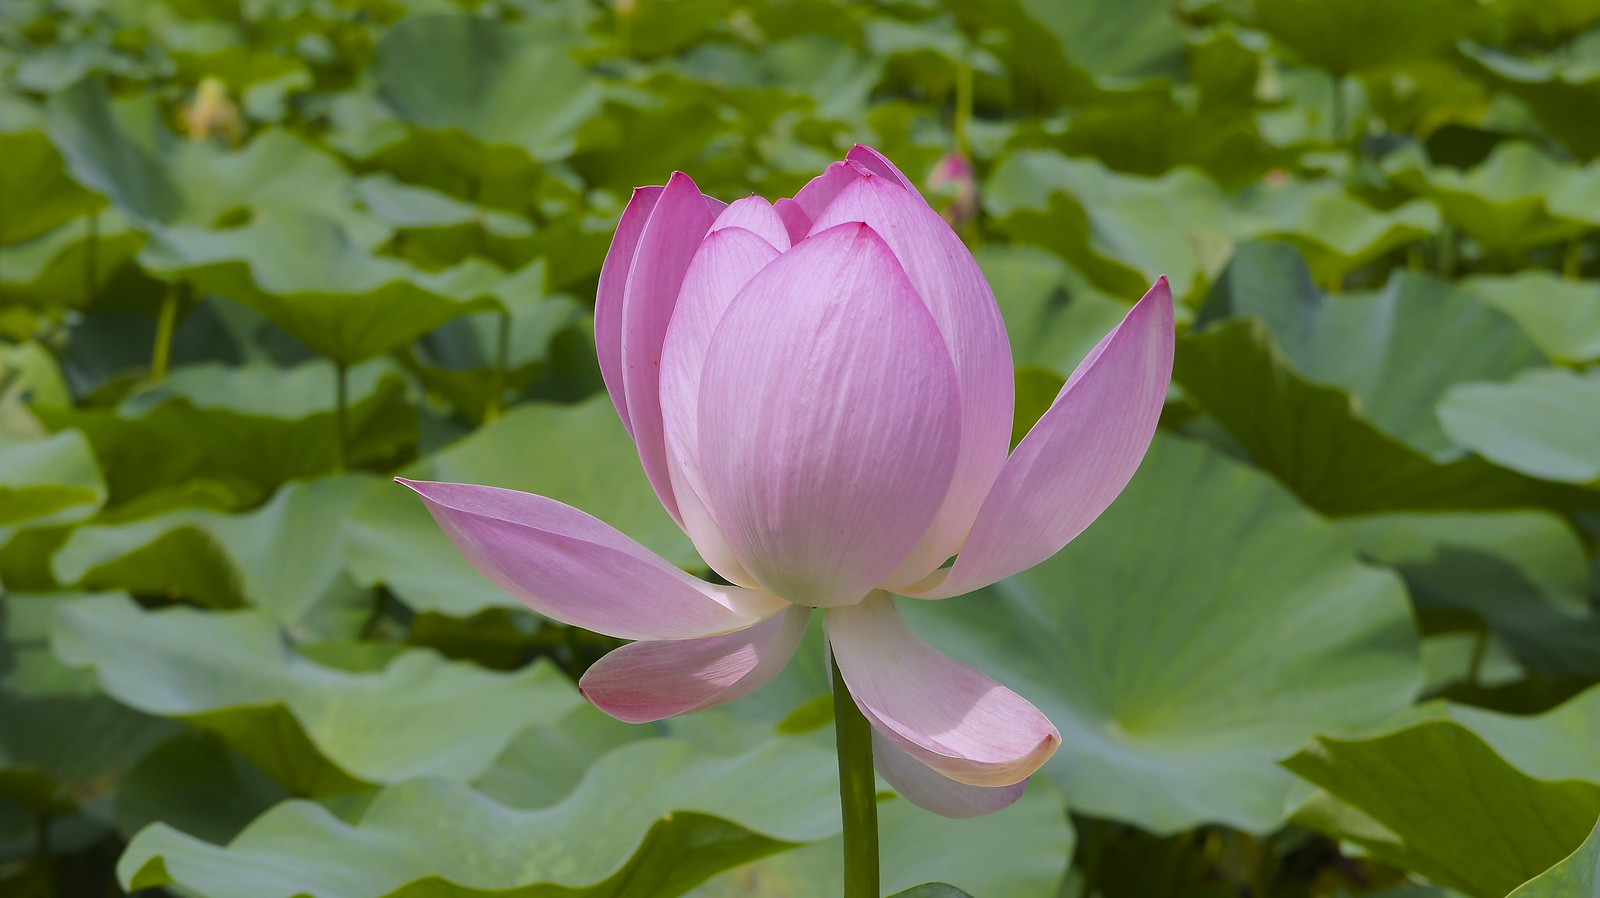 Lotus flowers at Chiba Koen